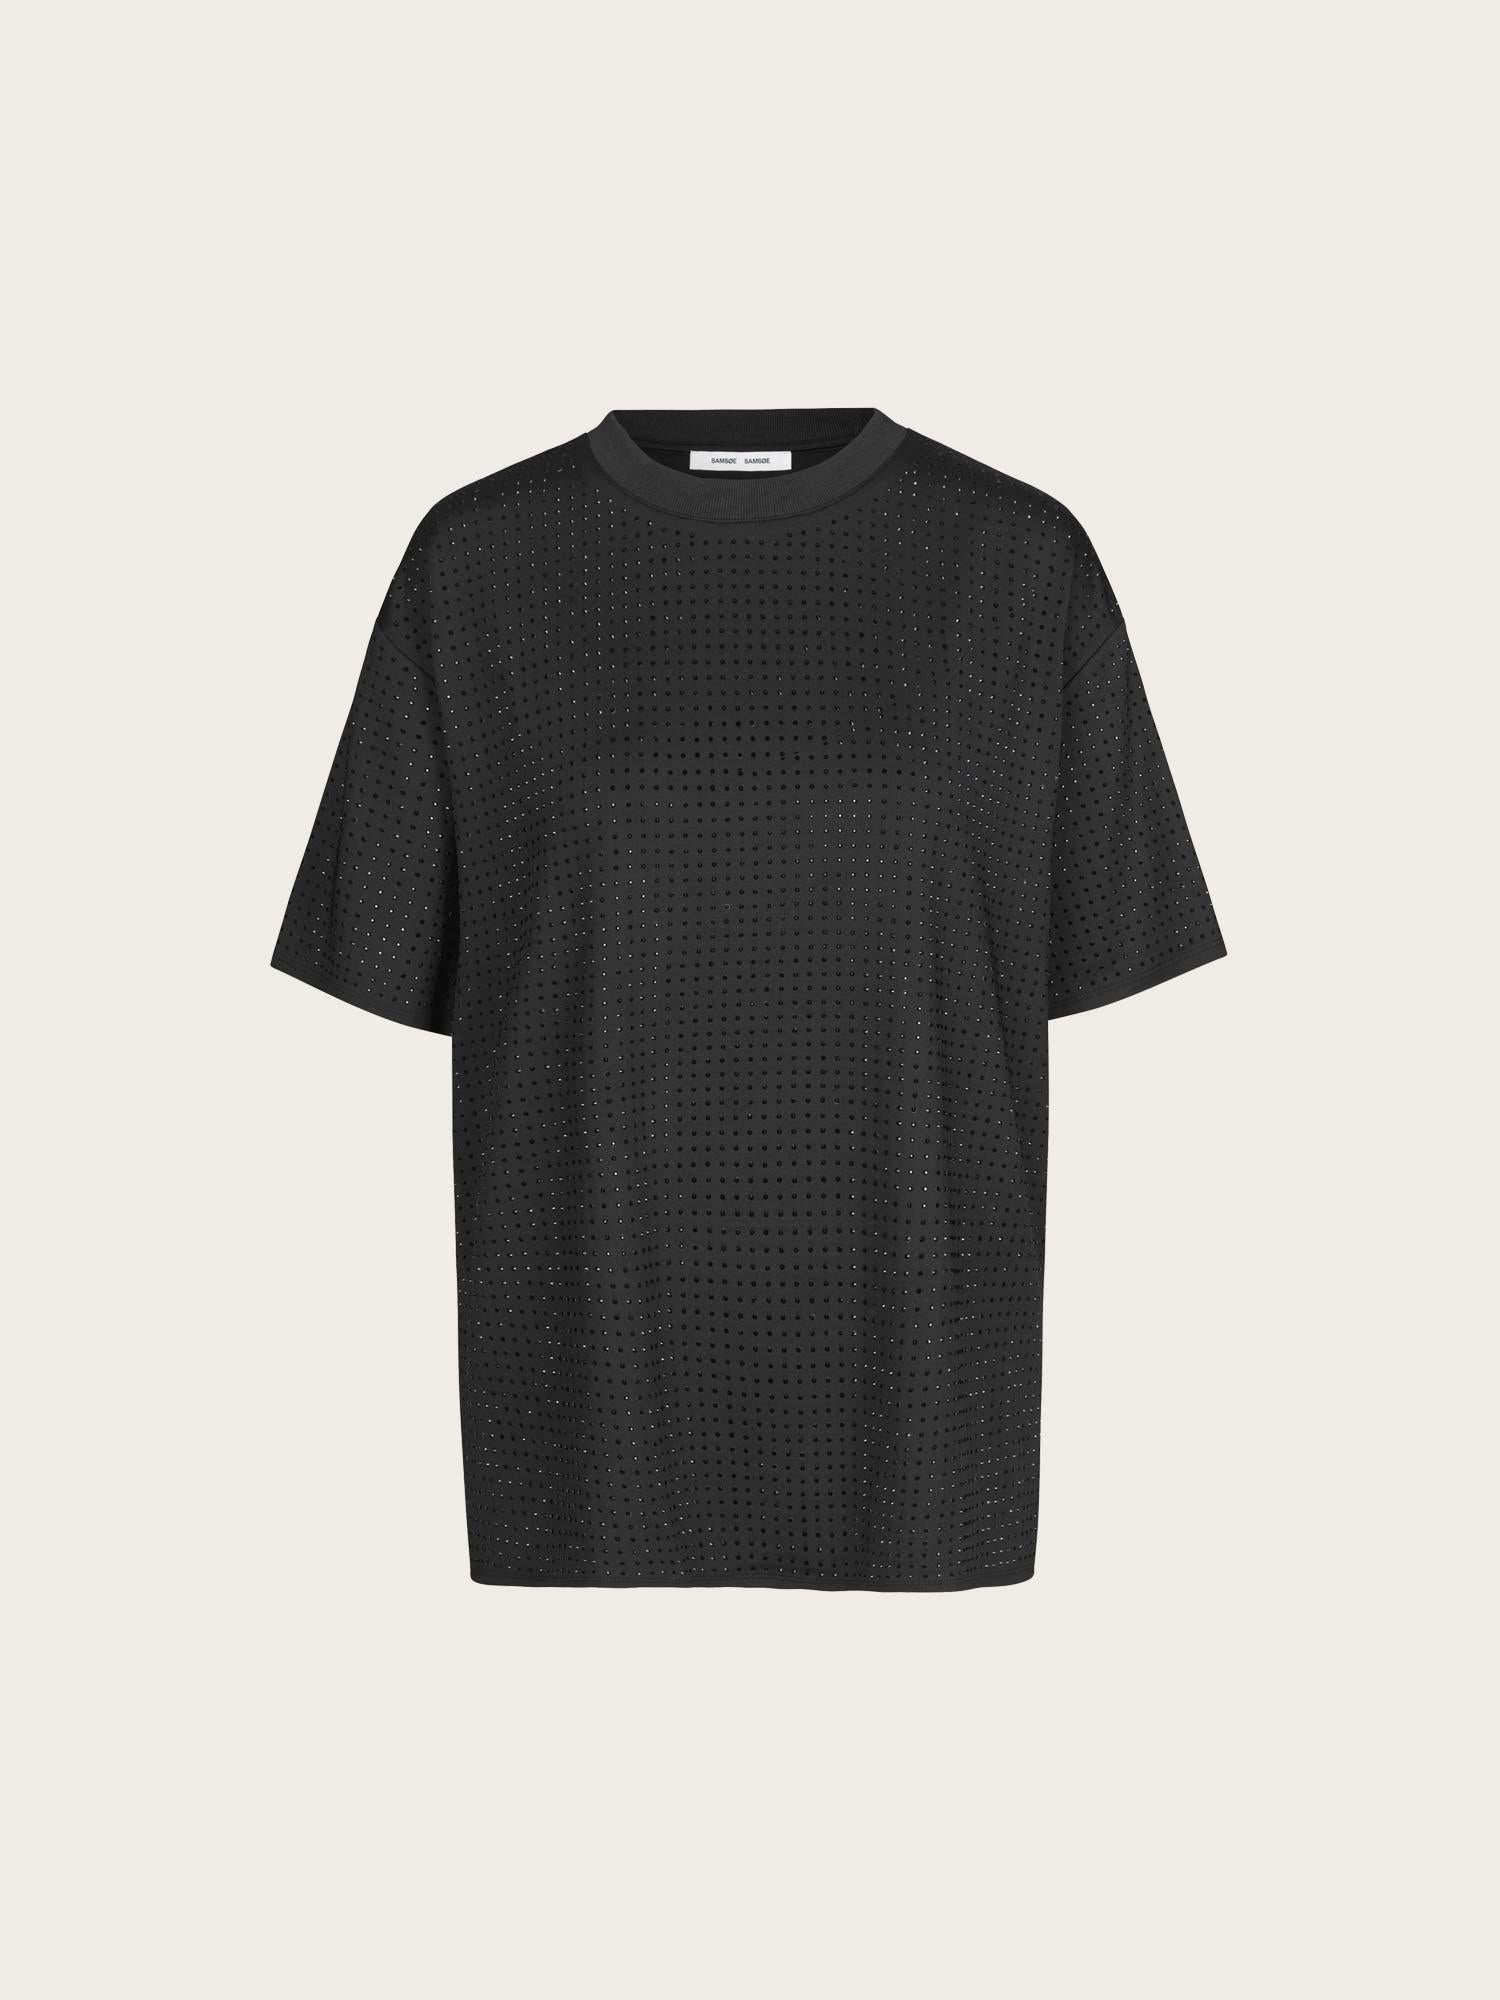 Chrishell T-shirt - Caviar